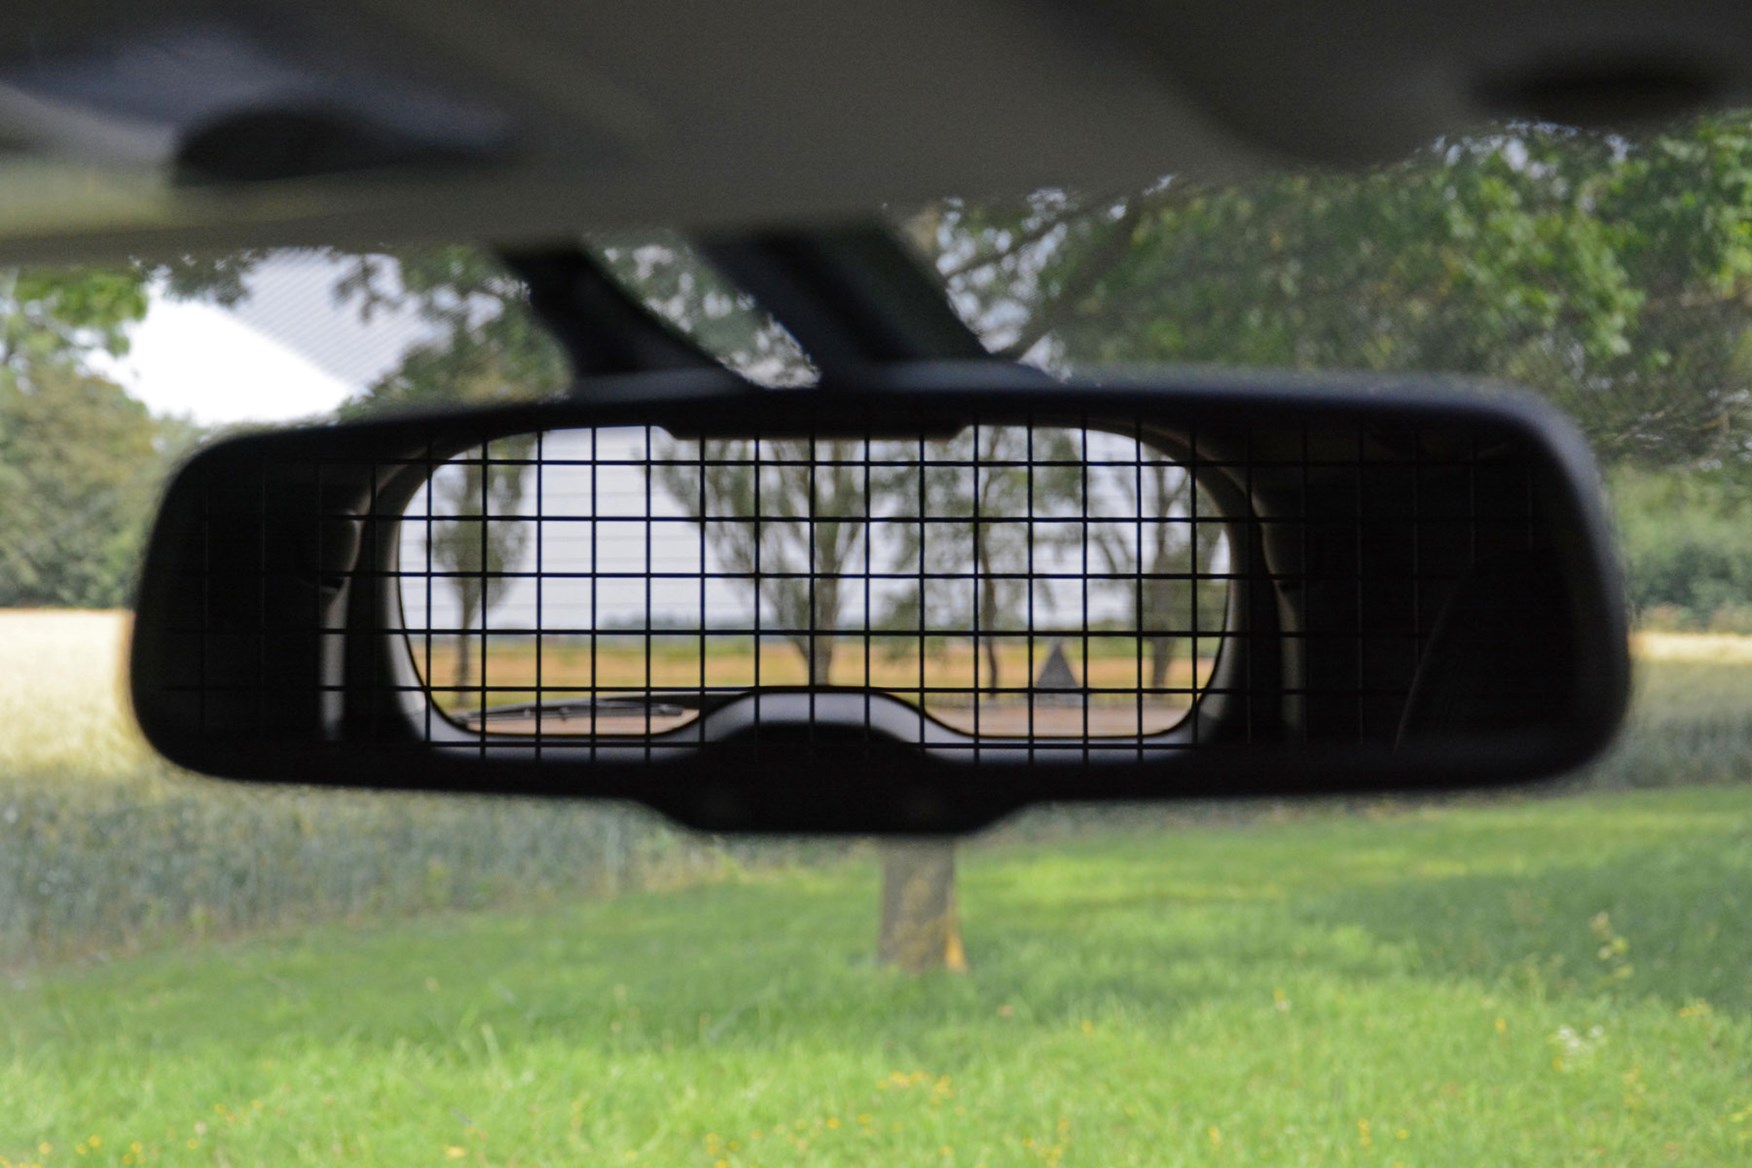 Mitsubishi Shogun Sport Commercial 4x4 van review - rear view in mirror through bulkhead mesh